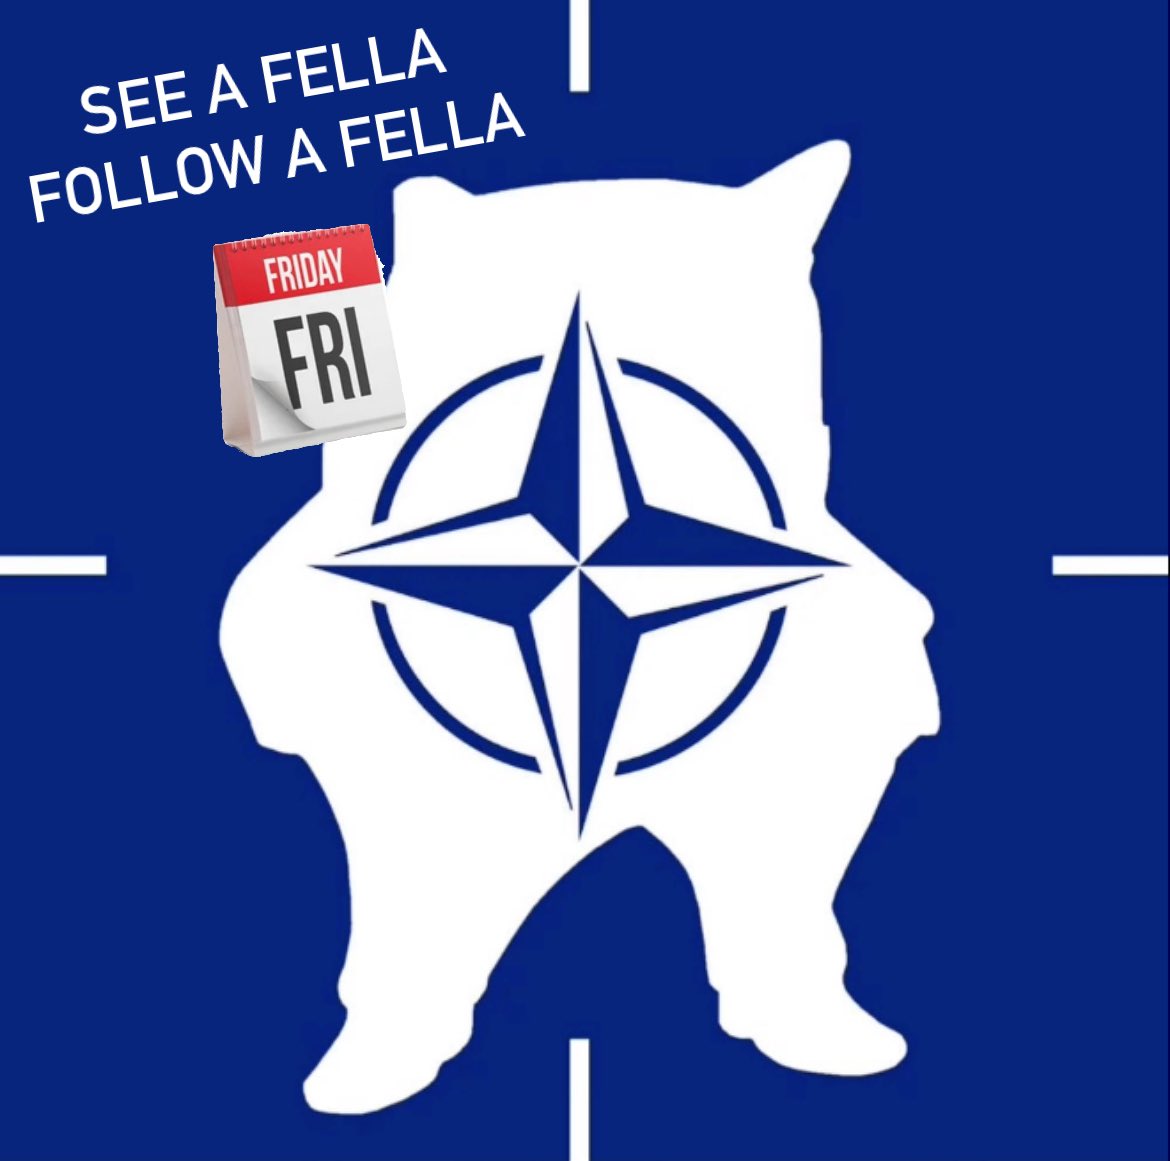 See a #fella follow a fella #friday #NAFO #wearenafo #seeafellafollowafella #followafellafriday #NAFOExpansionIsNonNegotiable #SlavaUkraïni #HeroyamSlava 🤟🇺🇦